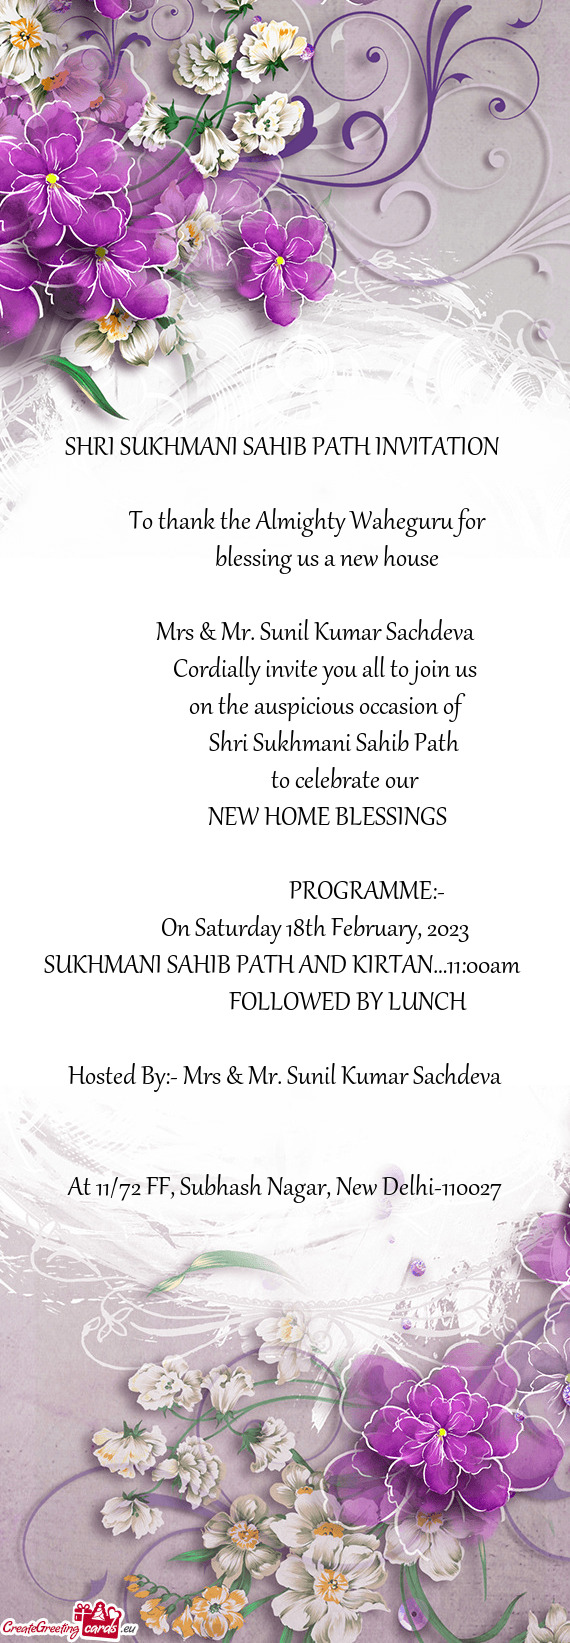 Mrs & Mr. Sunil Kumar Sachdeva